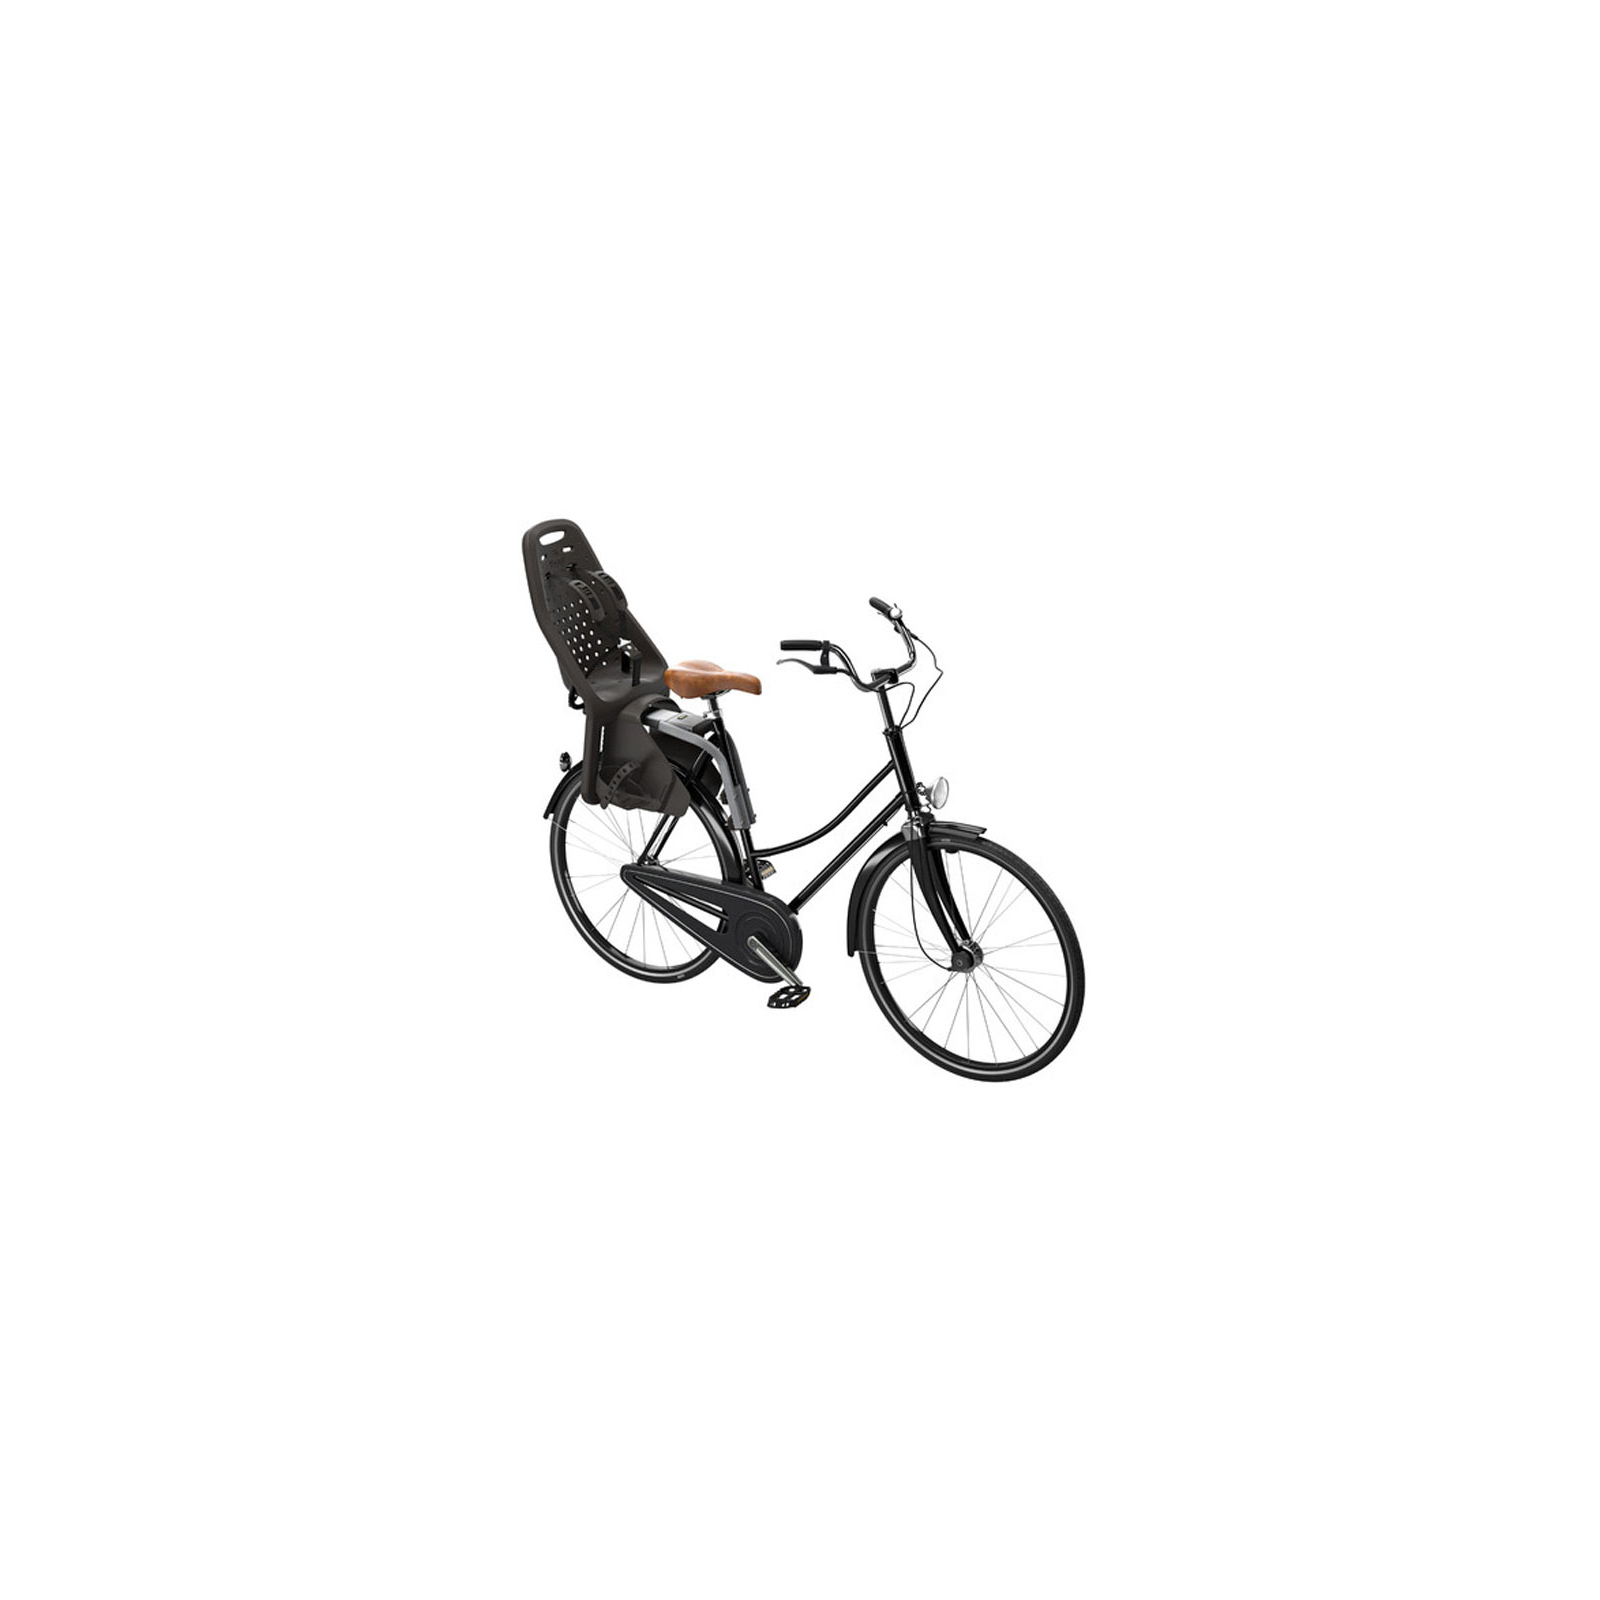 Детское велокресло Thule Yepp Maxi Seat Post (Black) (TH12020231) изображение 4